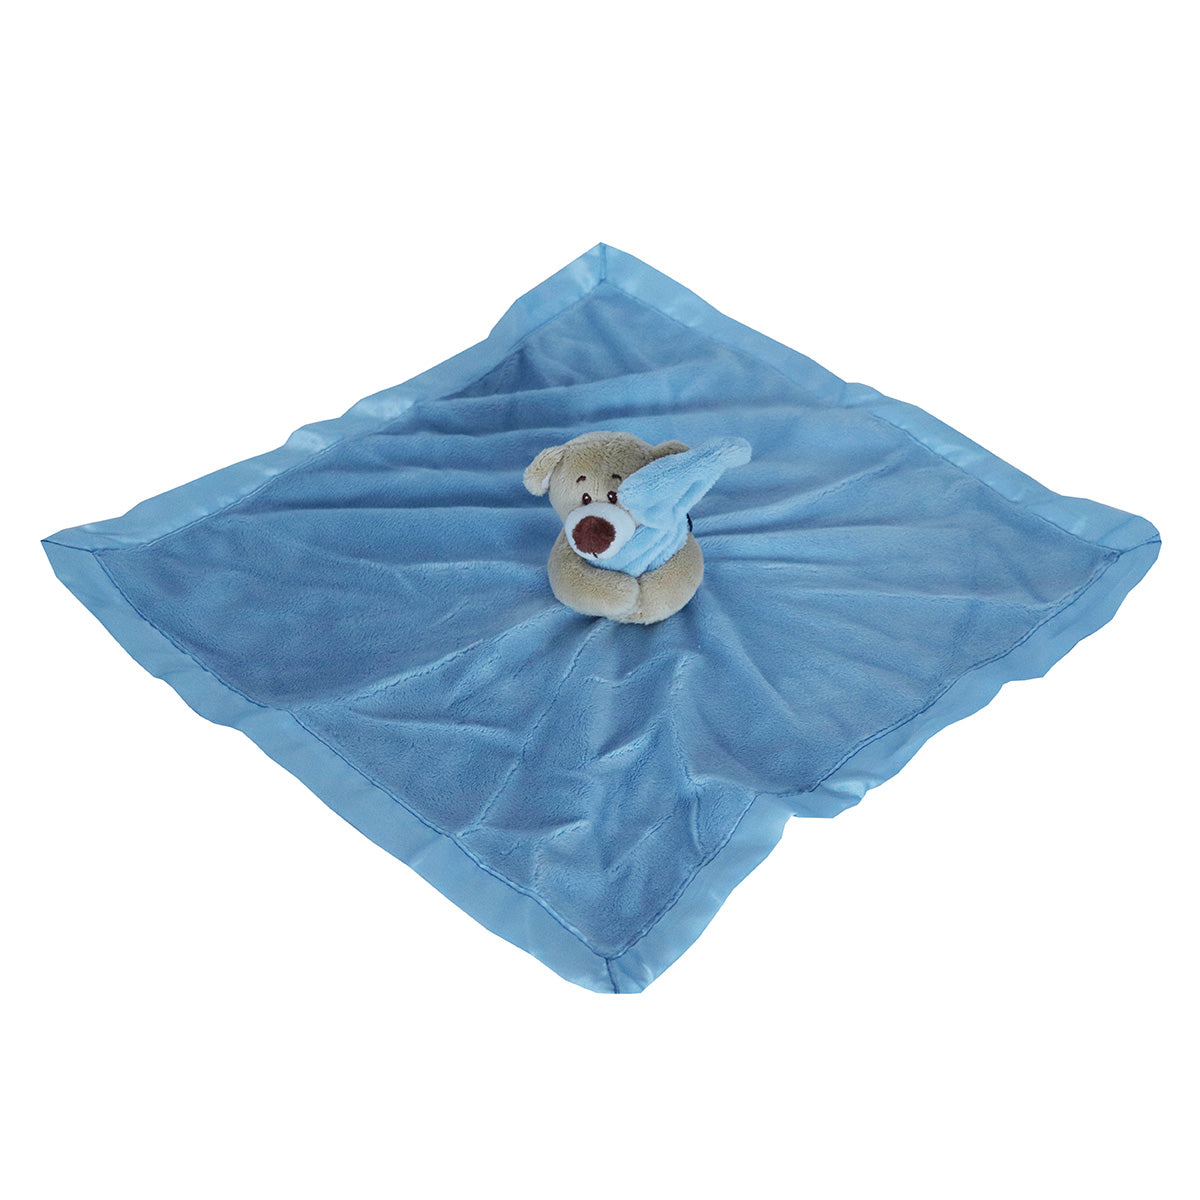 Snuggletime Cuddle Cub Security Blanket in Blue